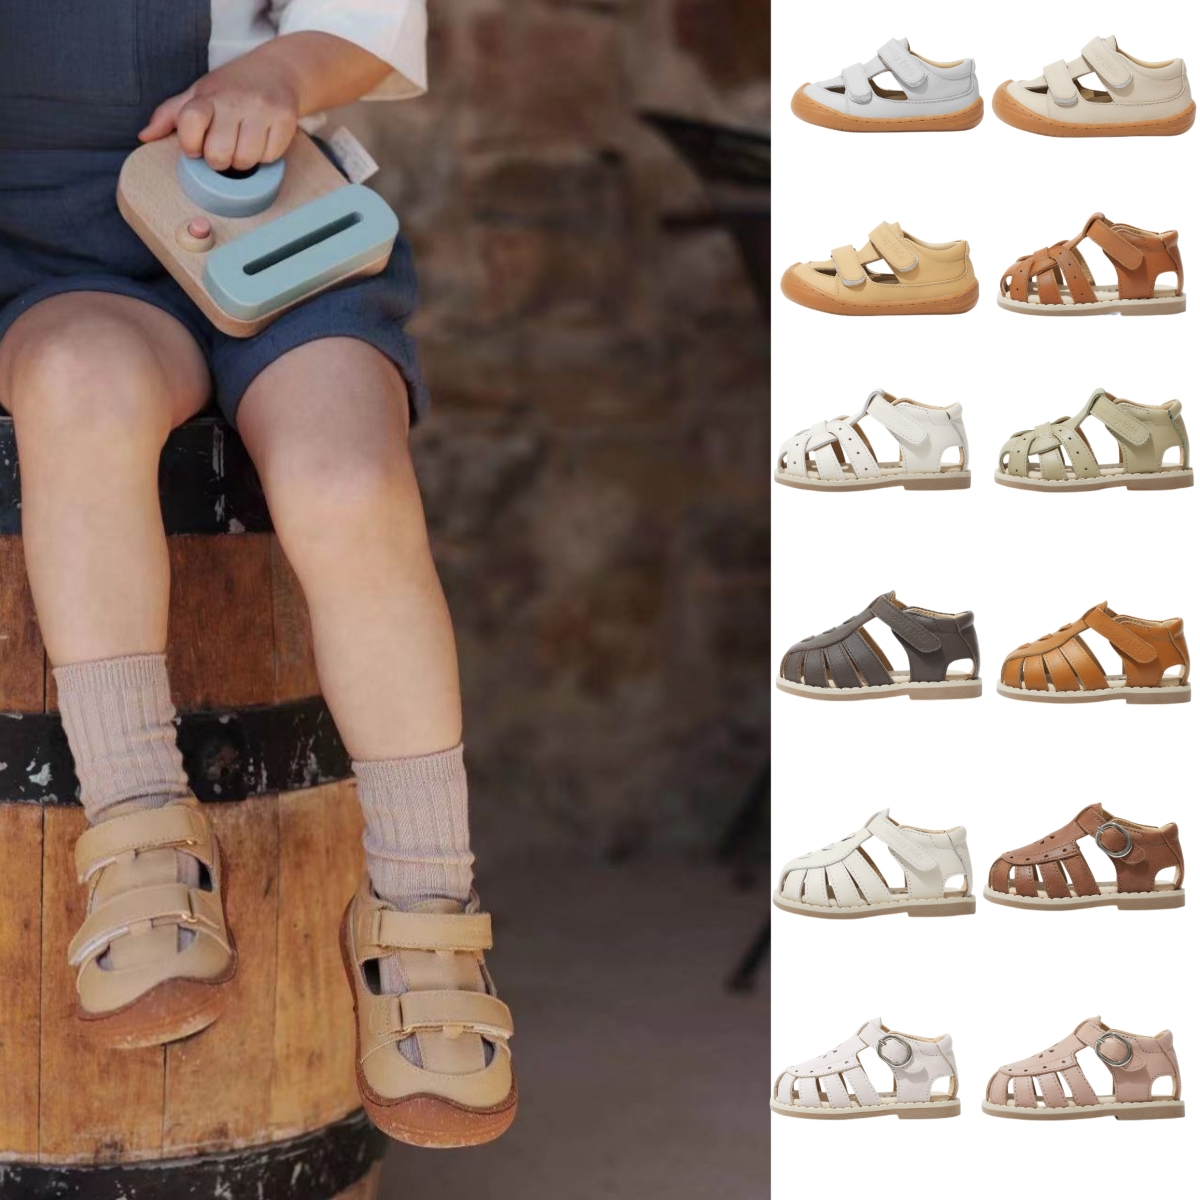 woolly kids宝宝凉鞋真皮软底学步鞋男女童包头包跟夏季沙滩鞋